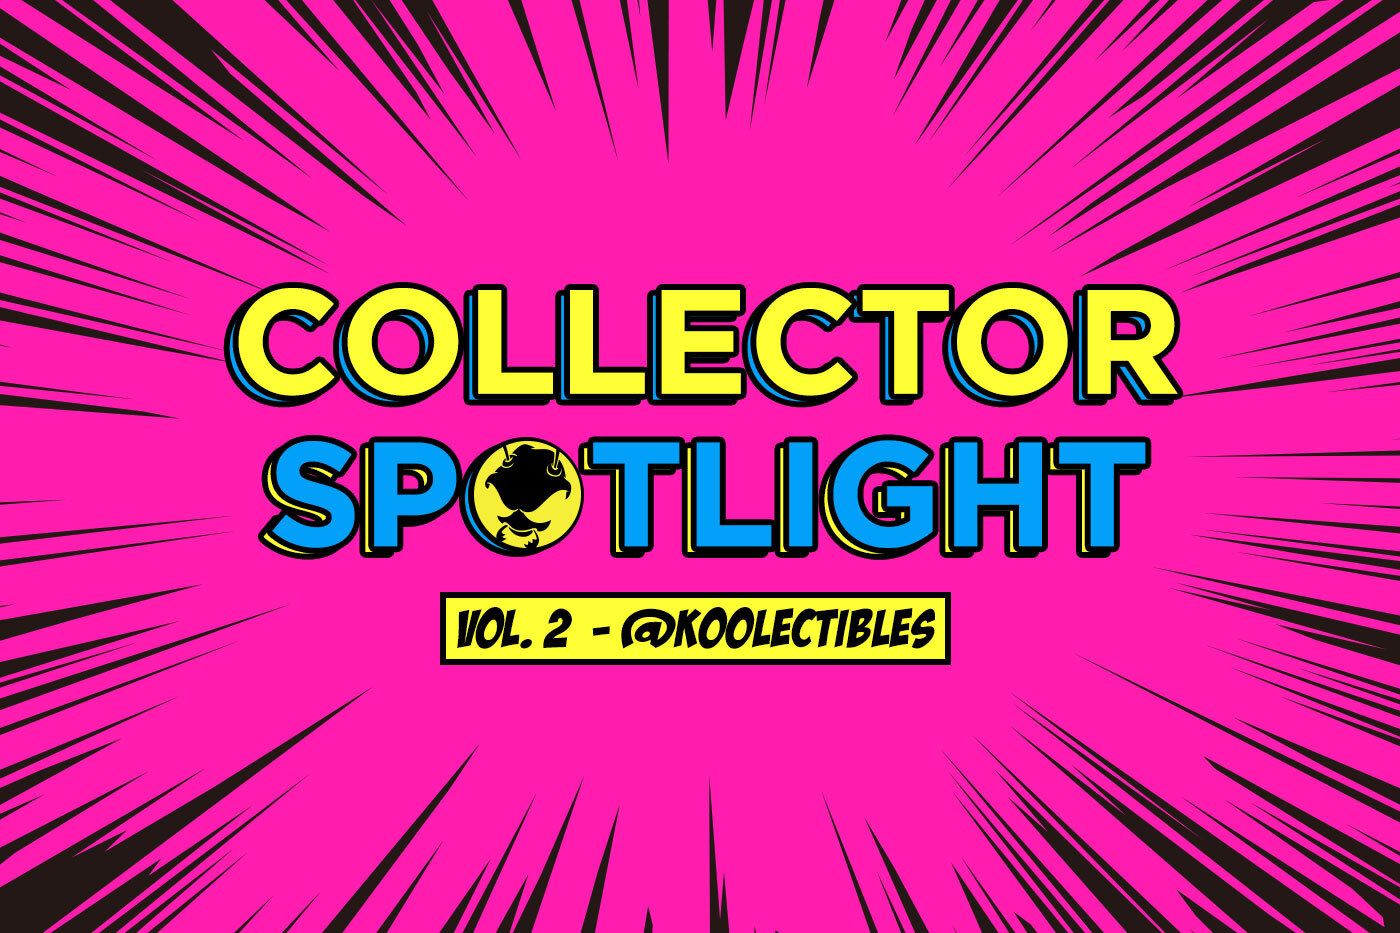 Collector Spotlight Vol. 2 - @k00lectibles